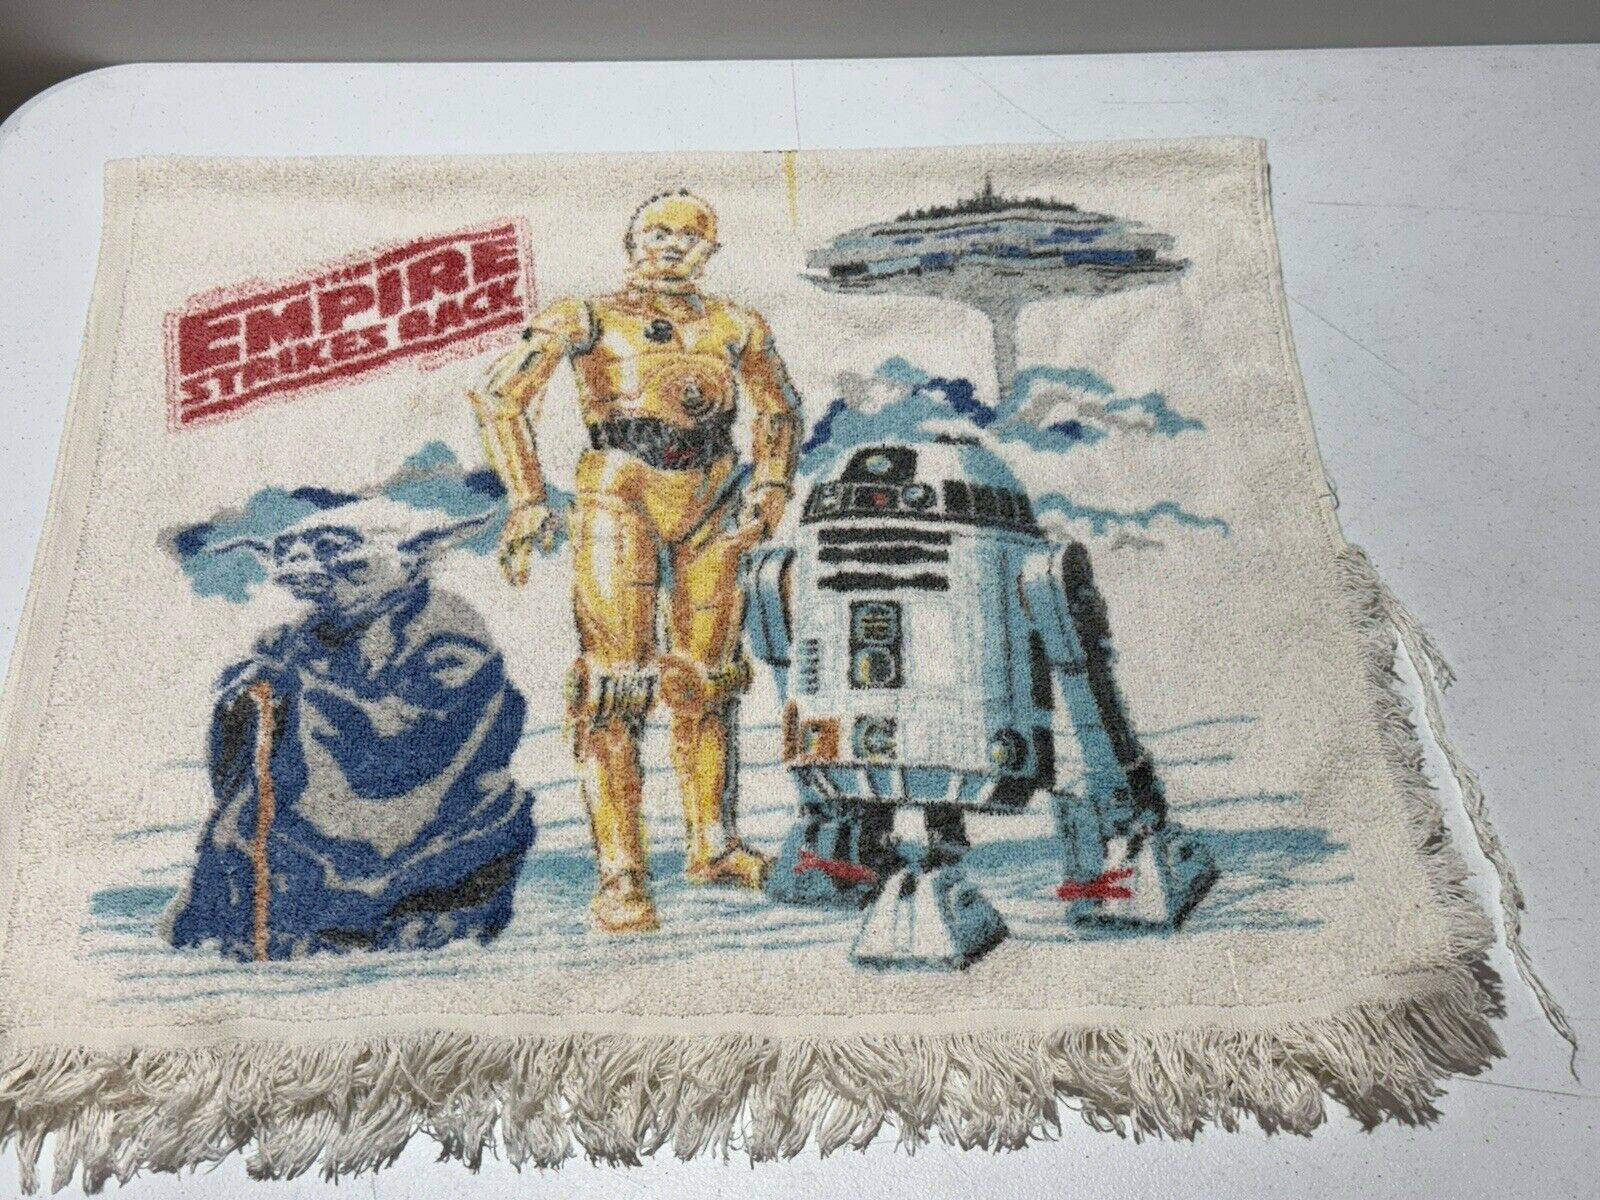 Vintage Empire Strikes Back Star Wars Towel Darth Vader C3PO R2D2 #8307 Set of 2